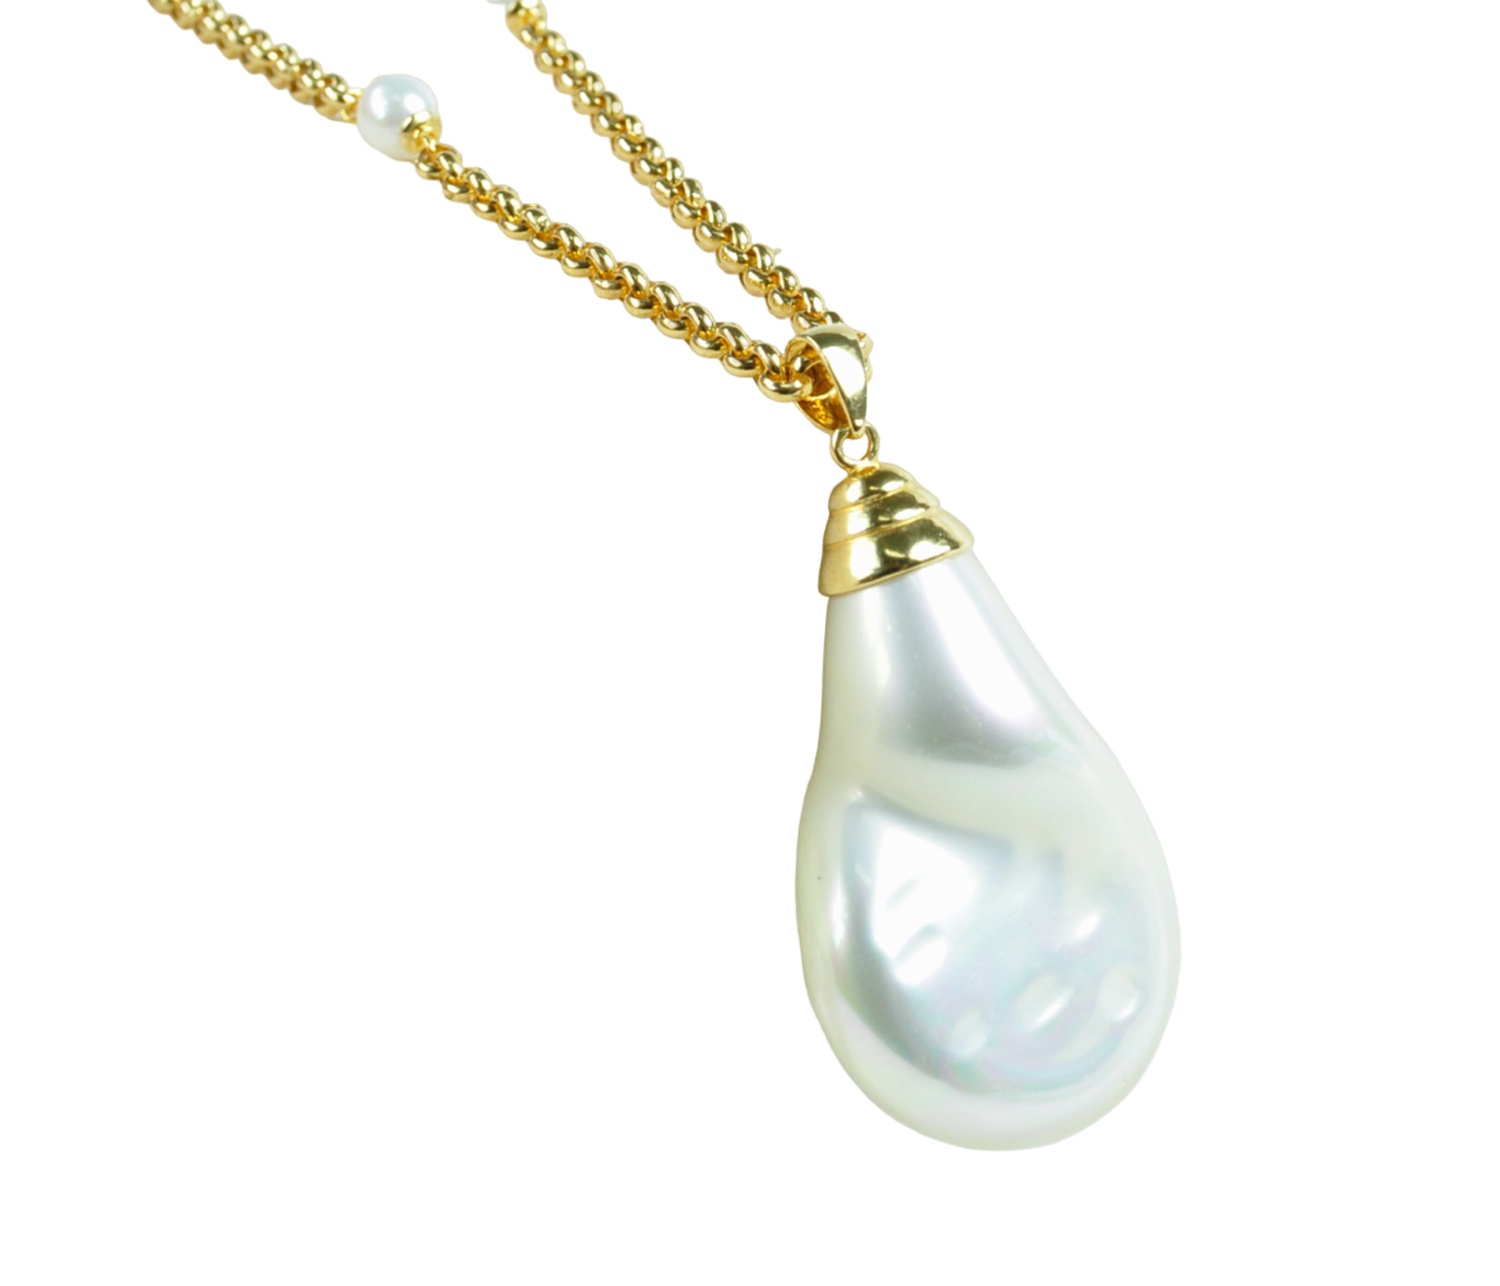 Teardrop shaped pendant on chain 1